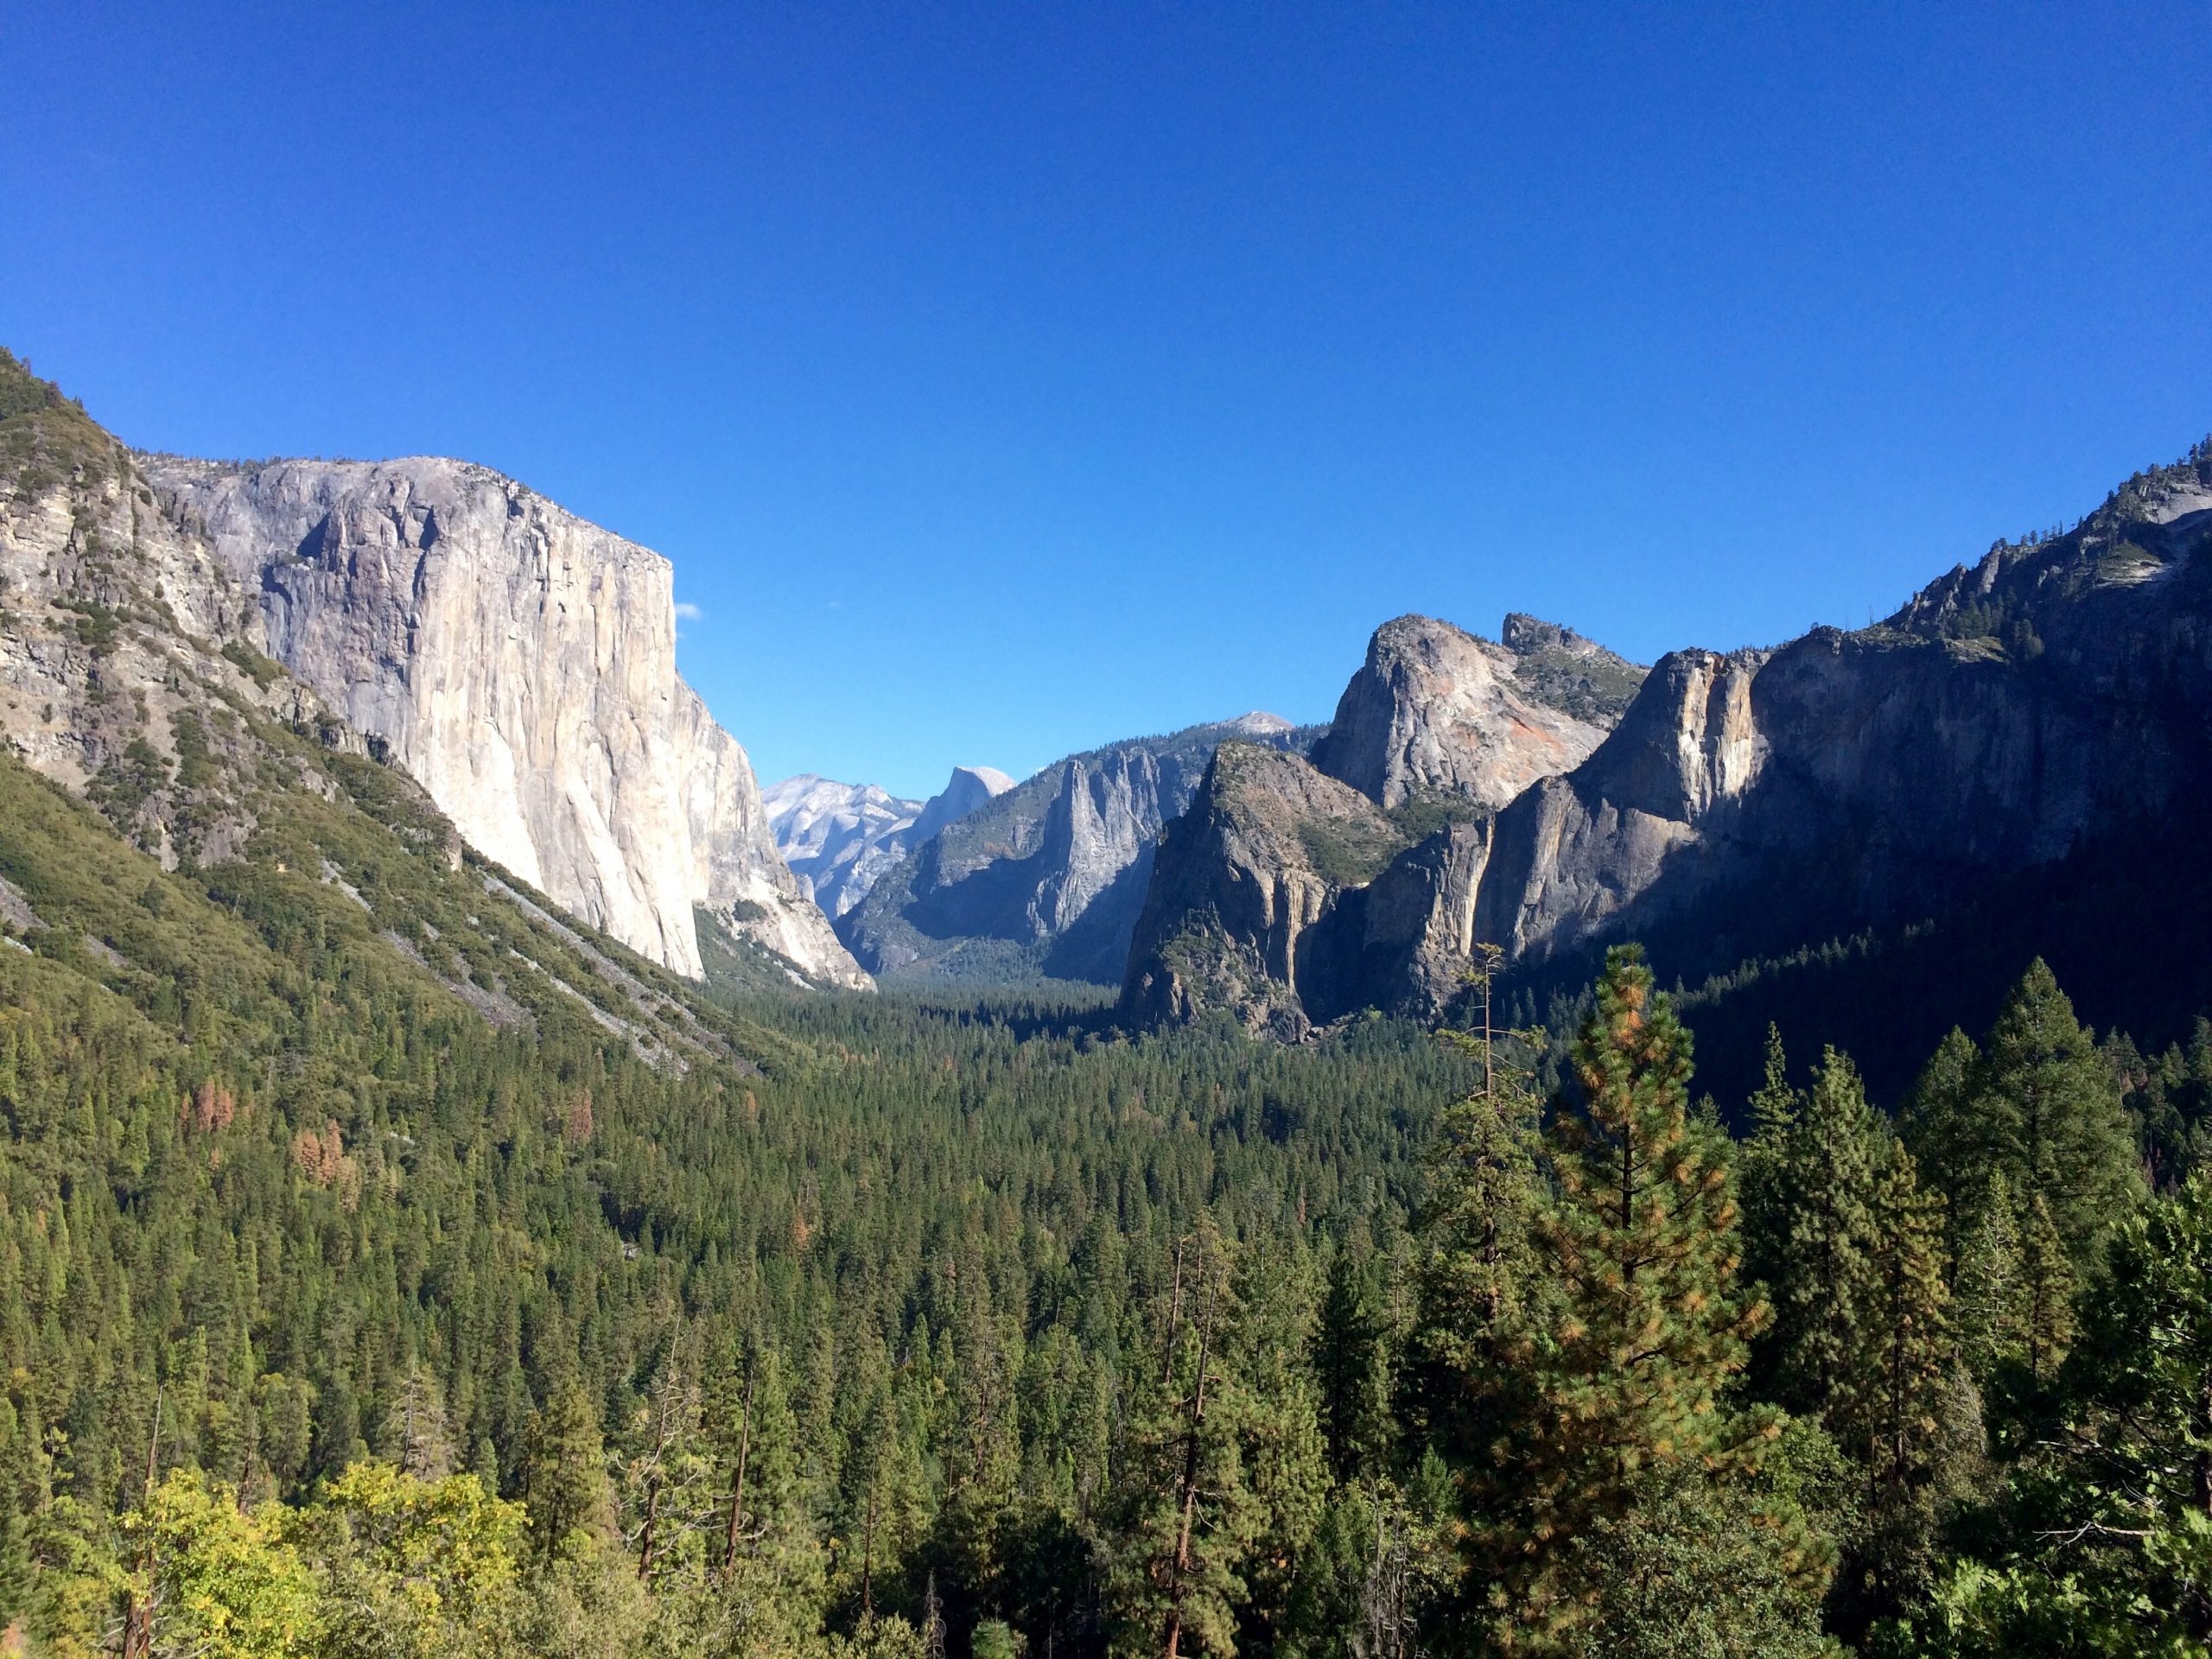 Yosemite National Park featuring El Capitan on the left